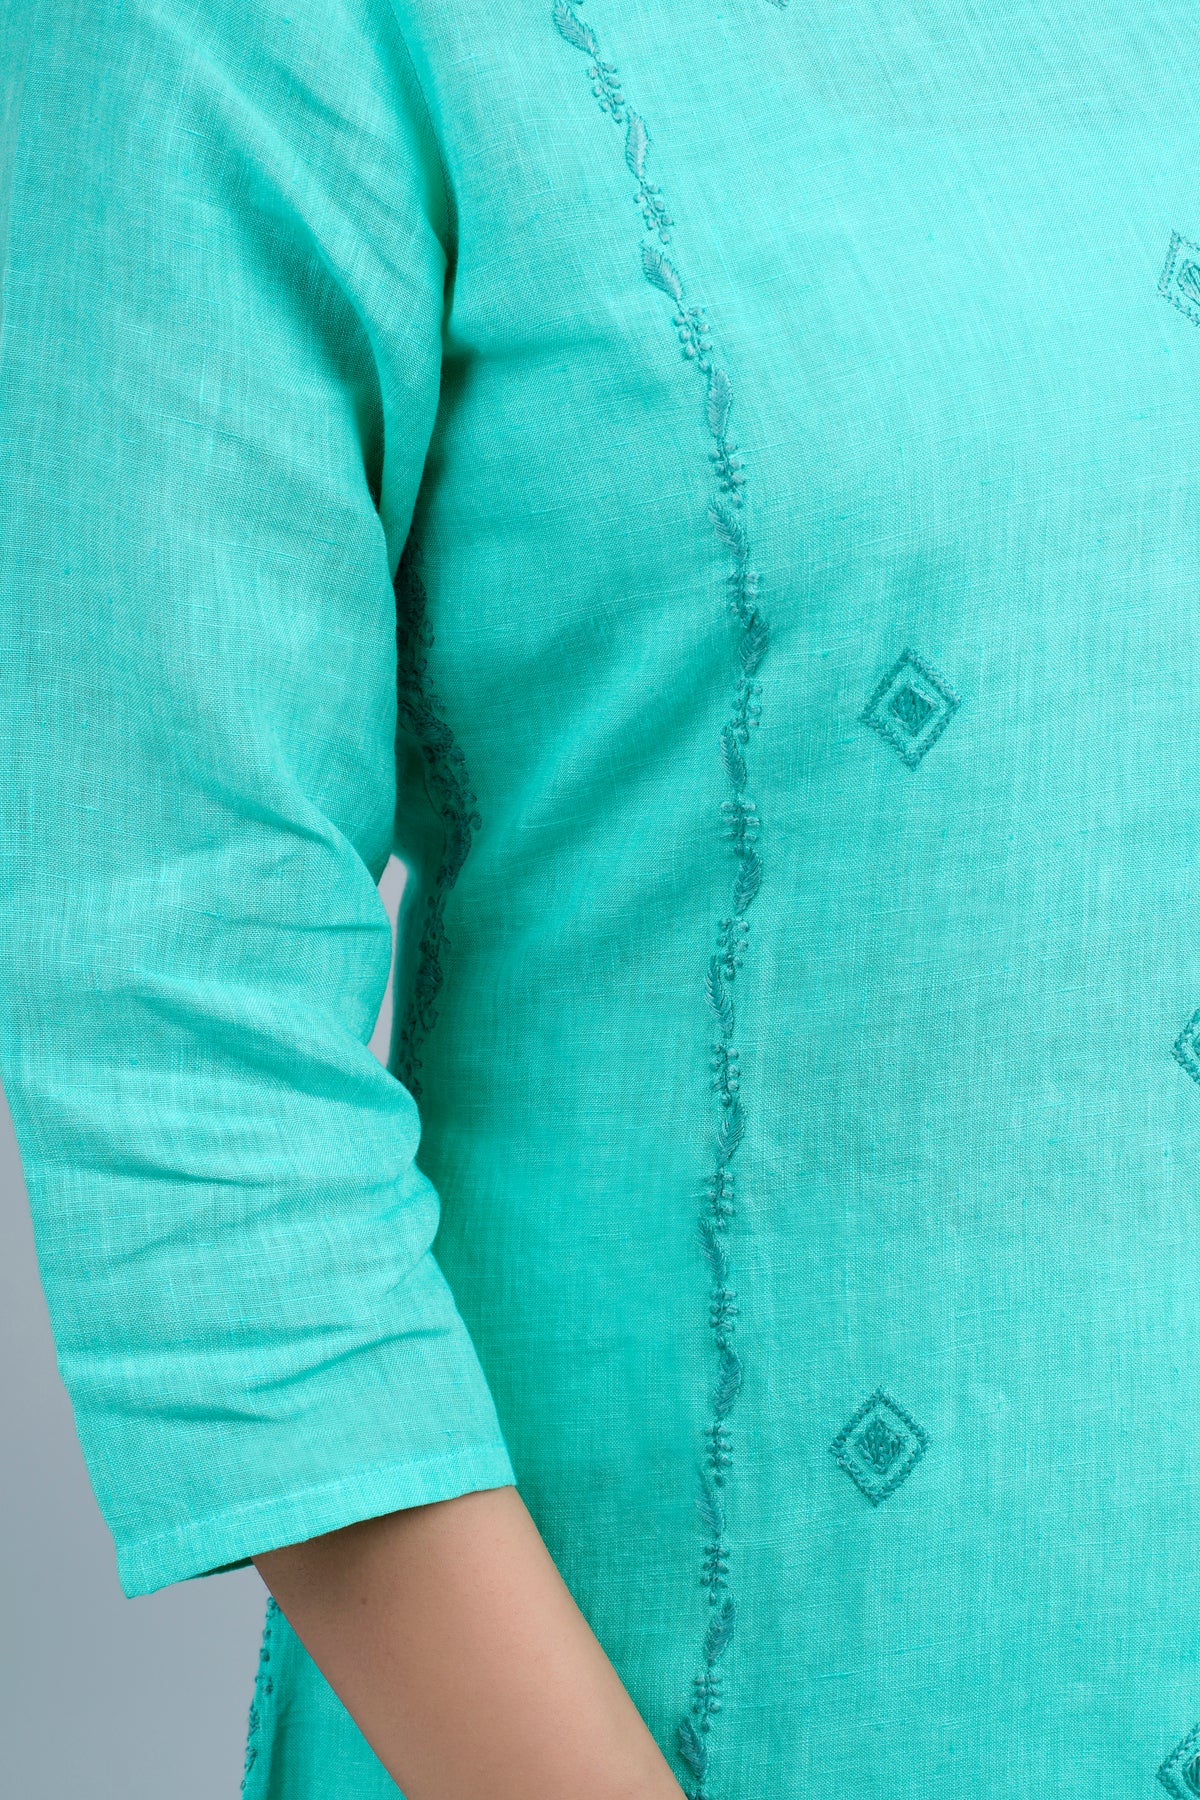 JUHI Linen-Cotton Hand Embroidered Tunic Kurti: Made to Order/Customizable